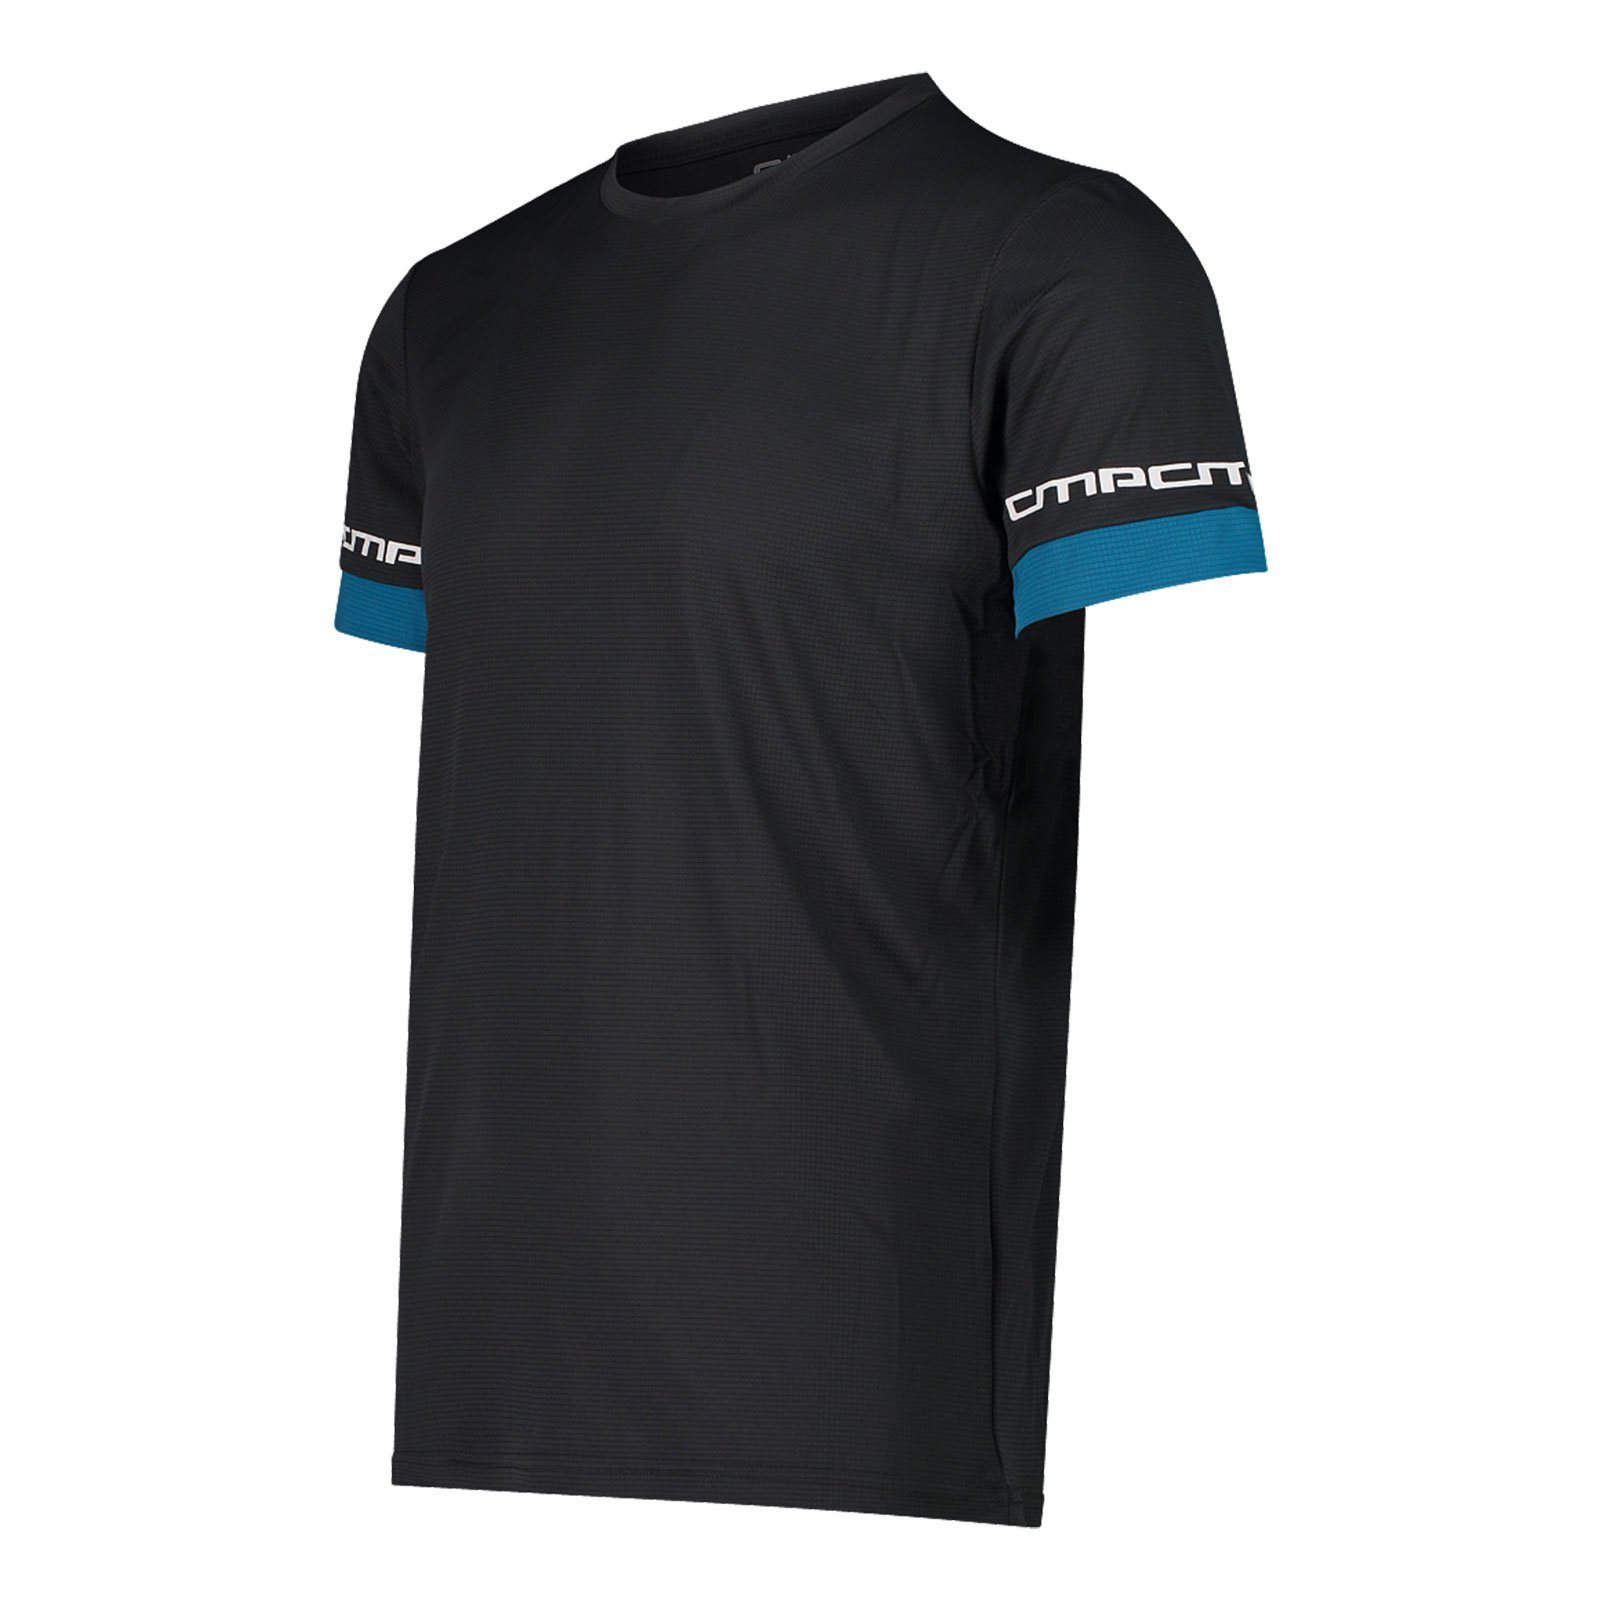 Man U423 Dry-Function-Technologie T-Shirt mit Funktionsshirt antracite CMP